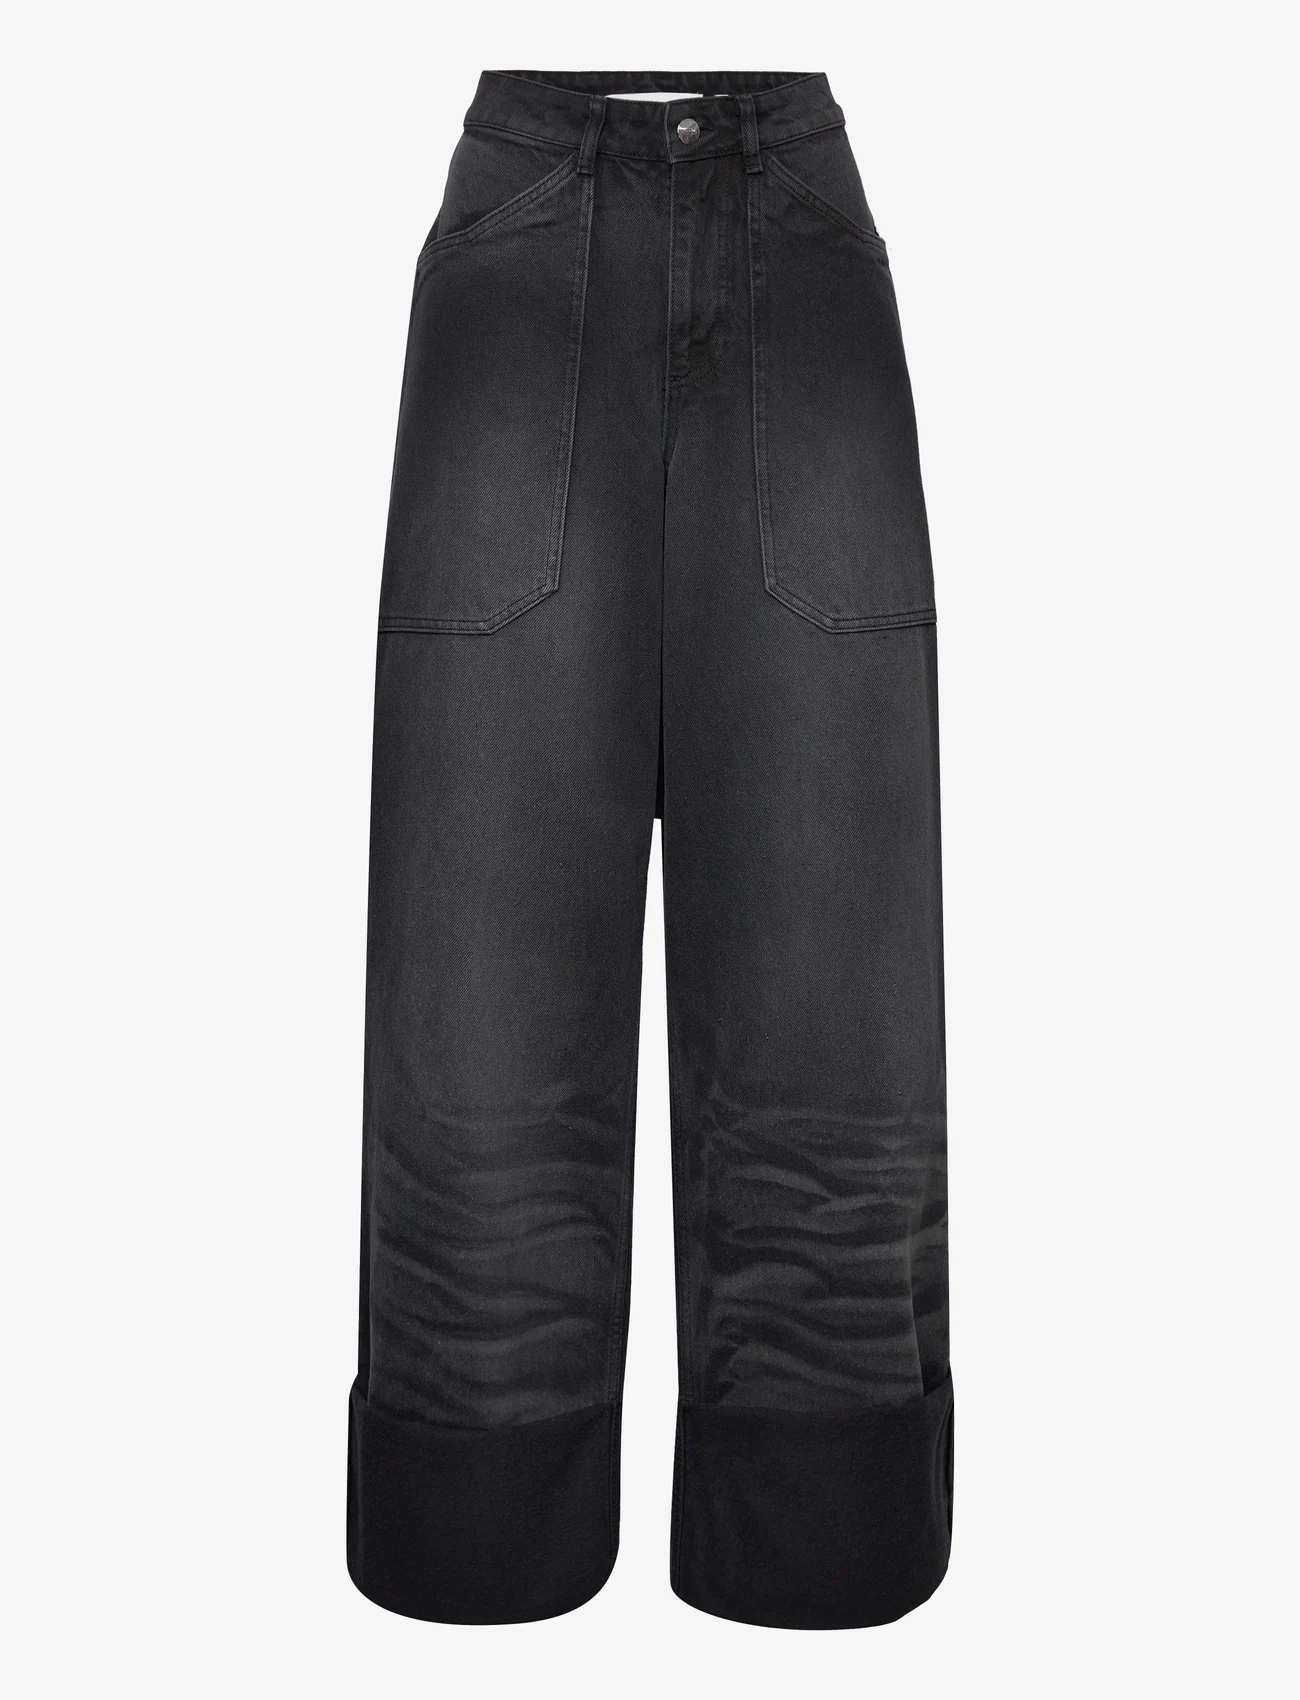 Cannari Concept - Black Wash Loose Jeans - platūs džinsai - forged iron - 0